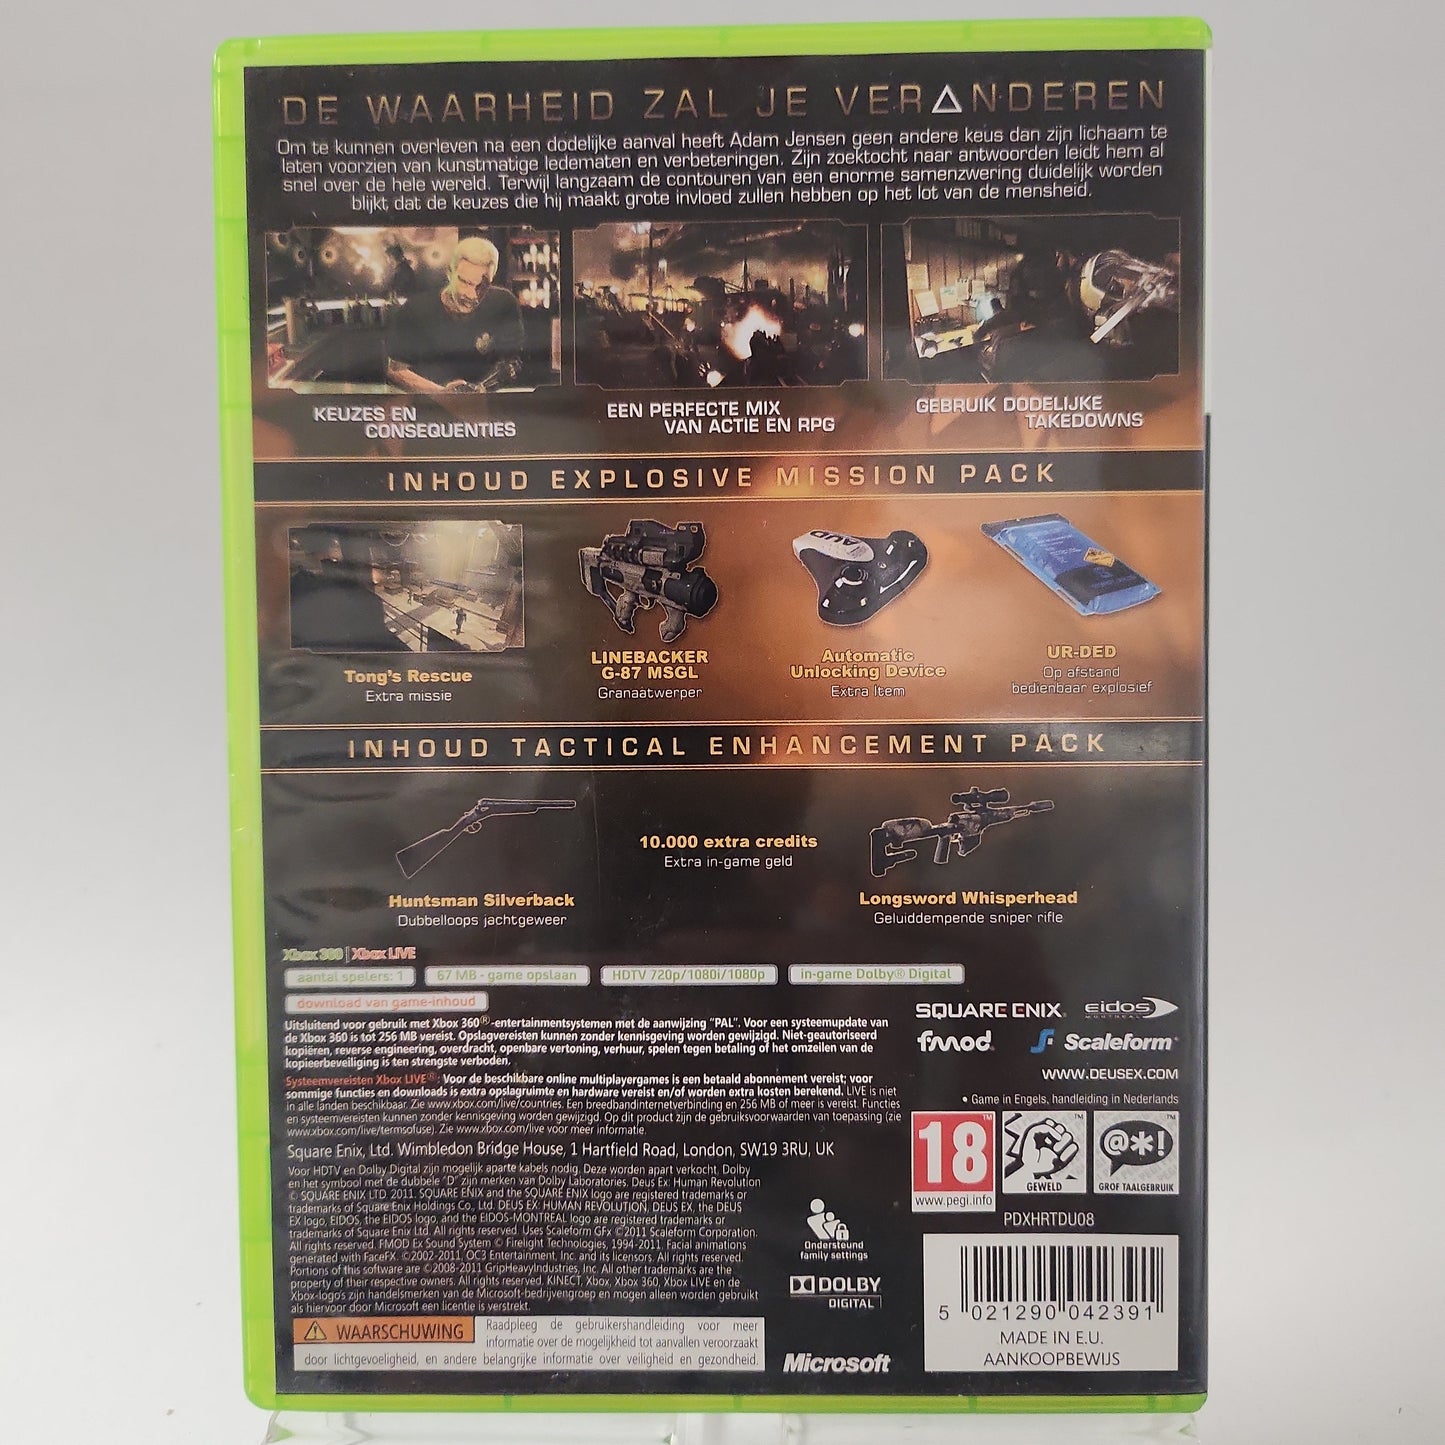 Deus Ex Human Revolution Benelux Edition Xbox 360